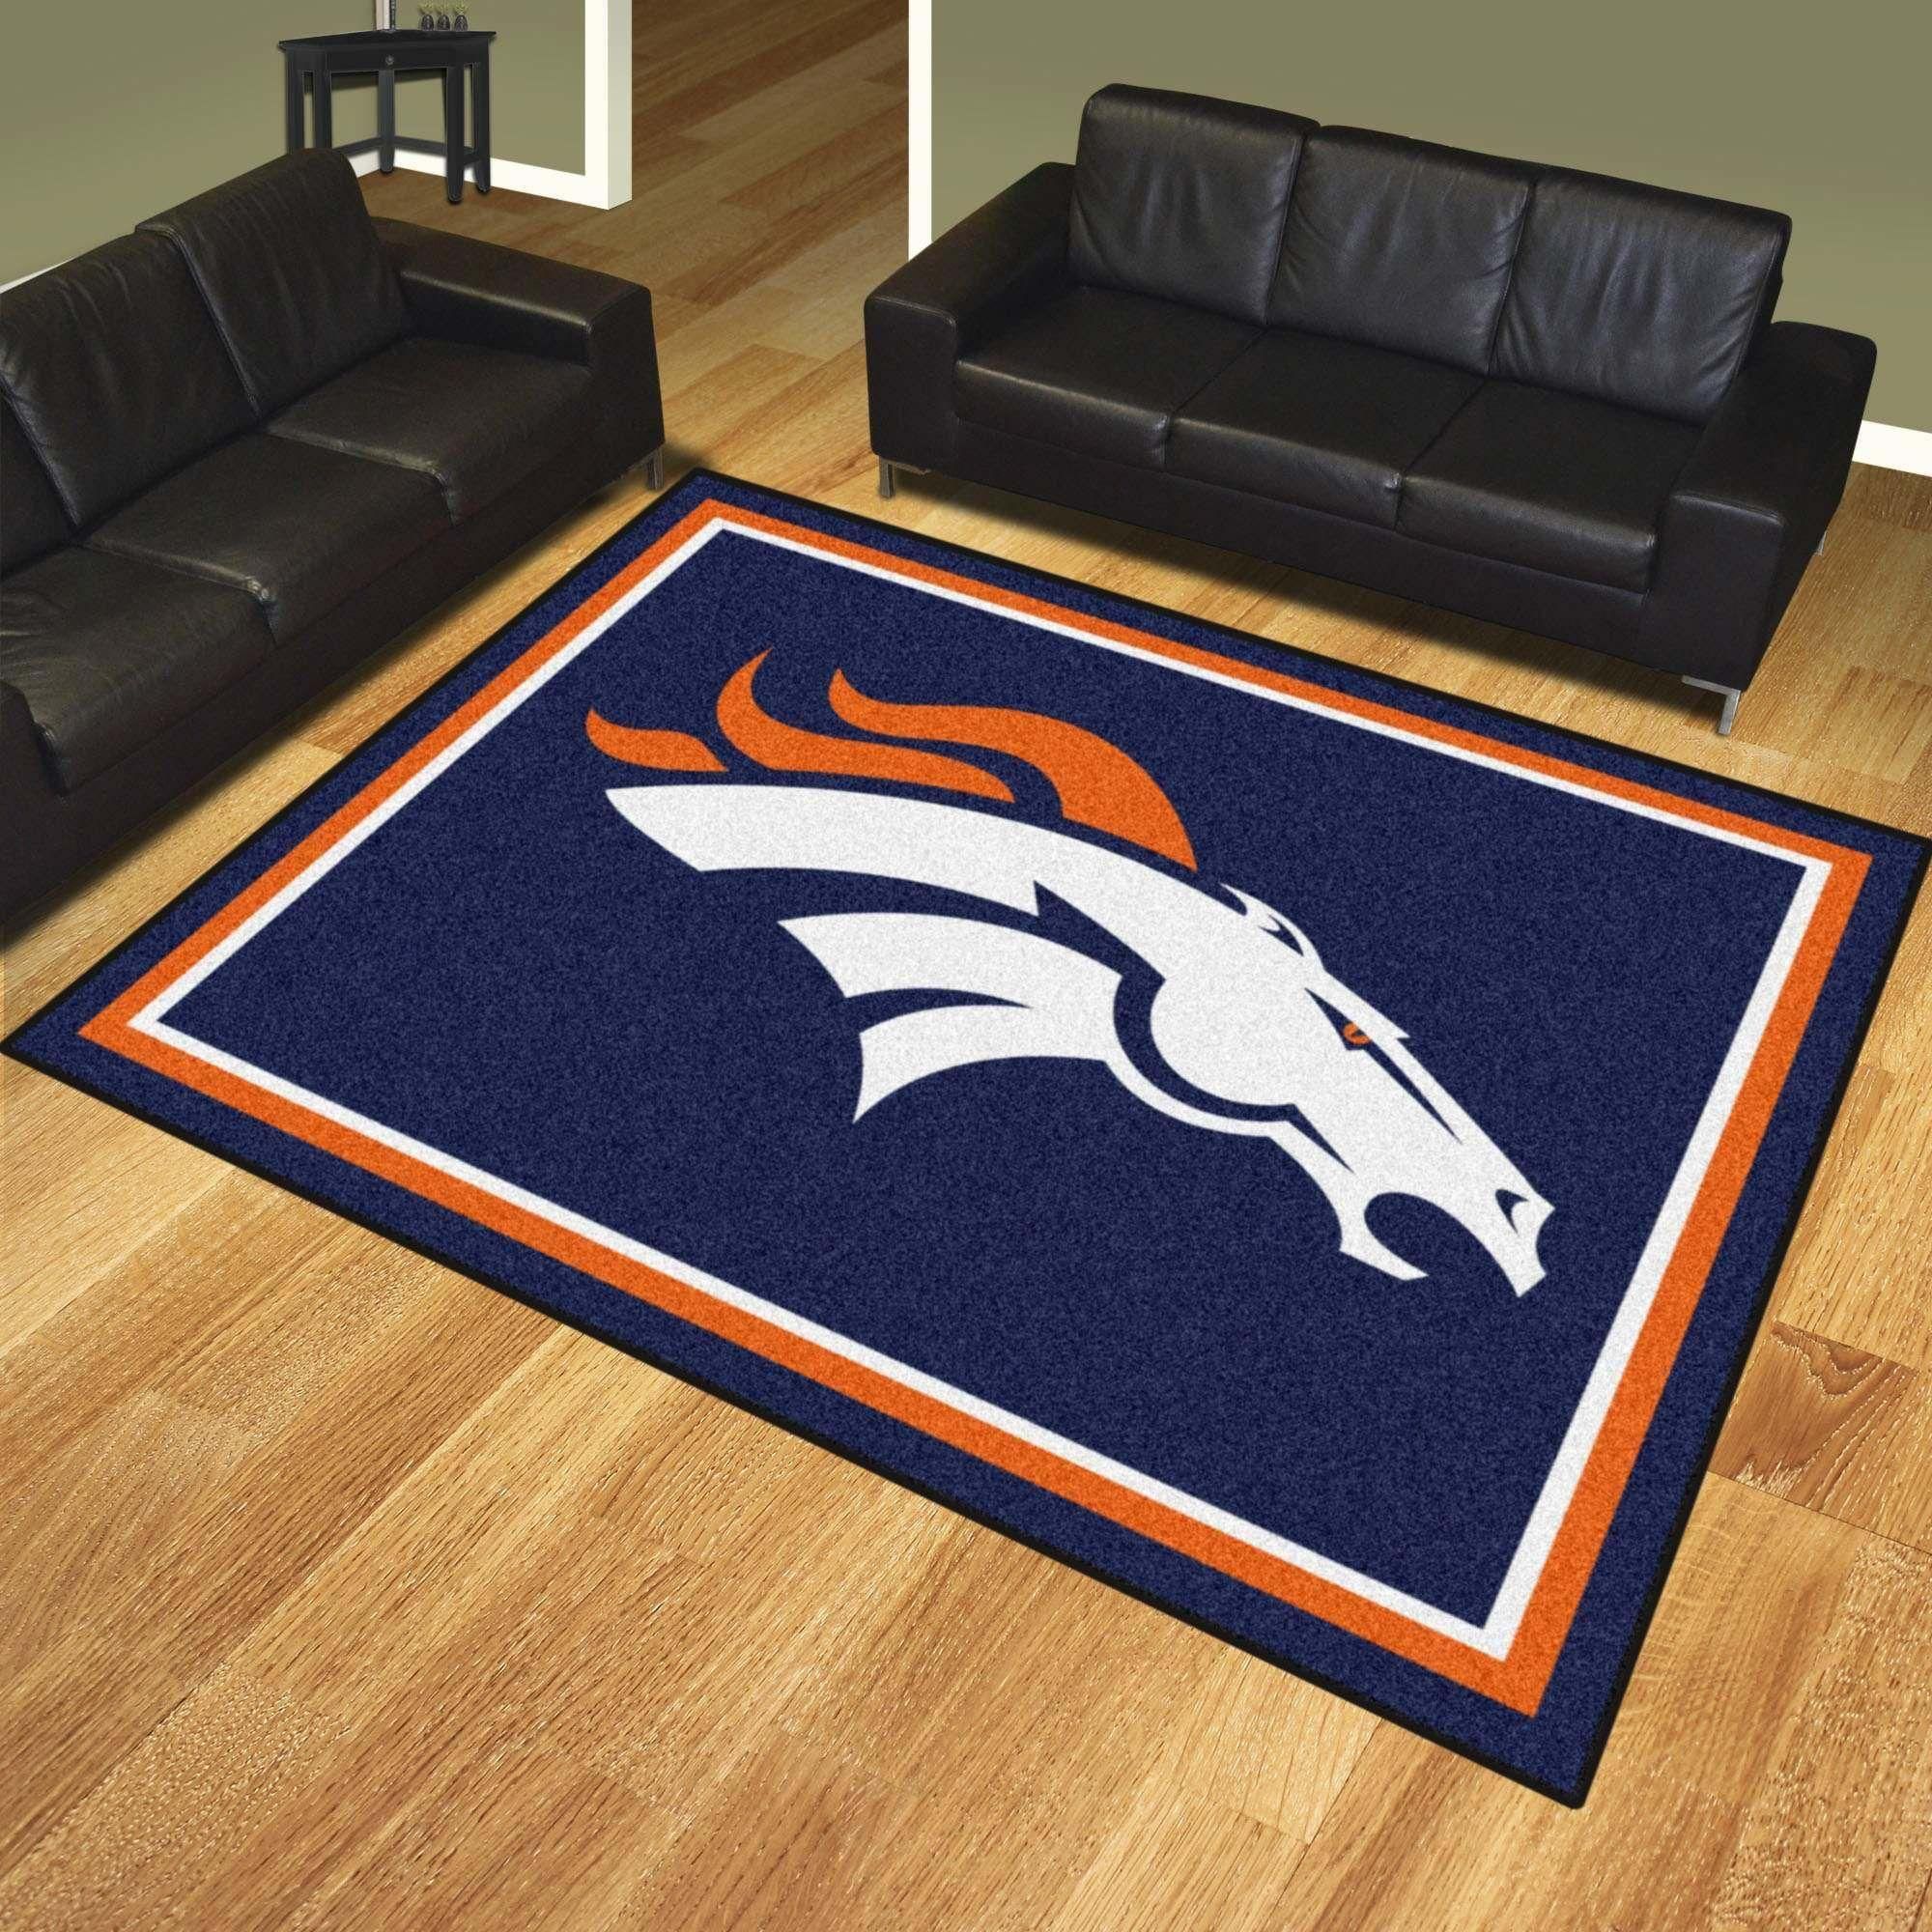 Denver Broncos Area Rug Chrismas Gift - Indoor Outdoor Rugs